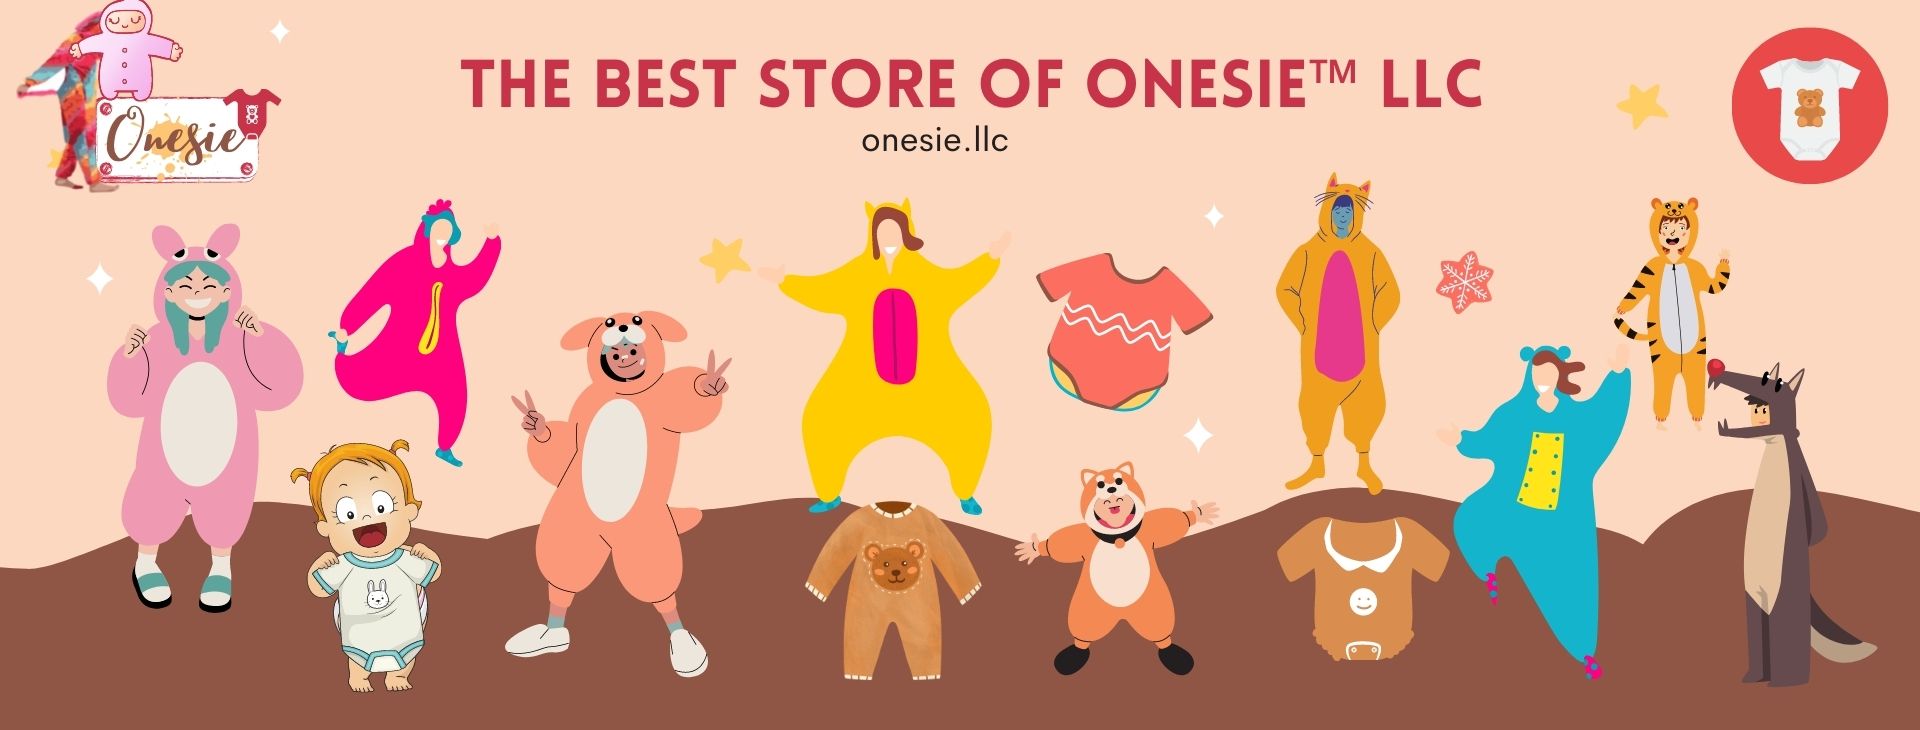 Onesie LLC Banner - Christmas Onesie